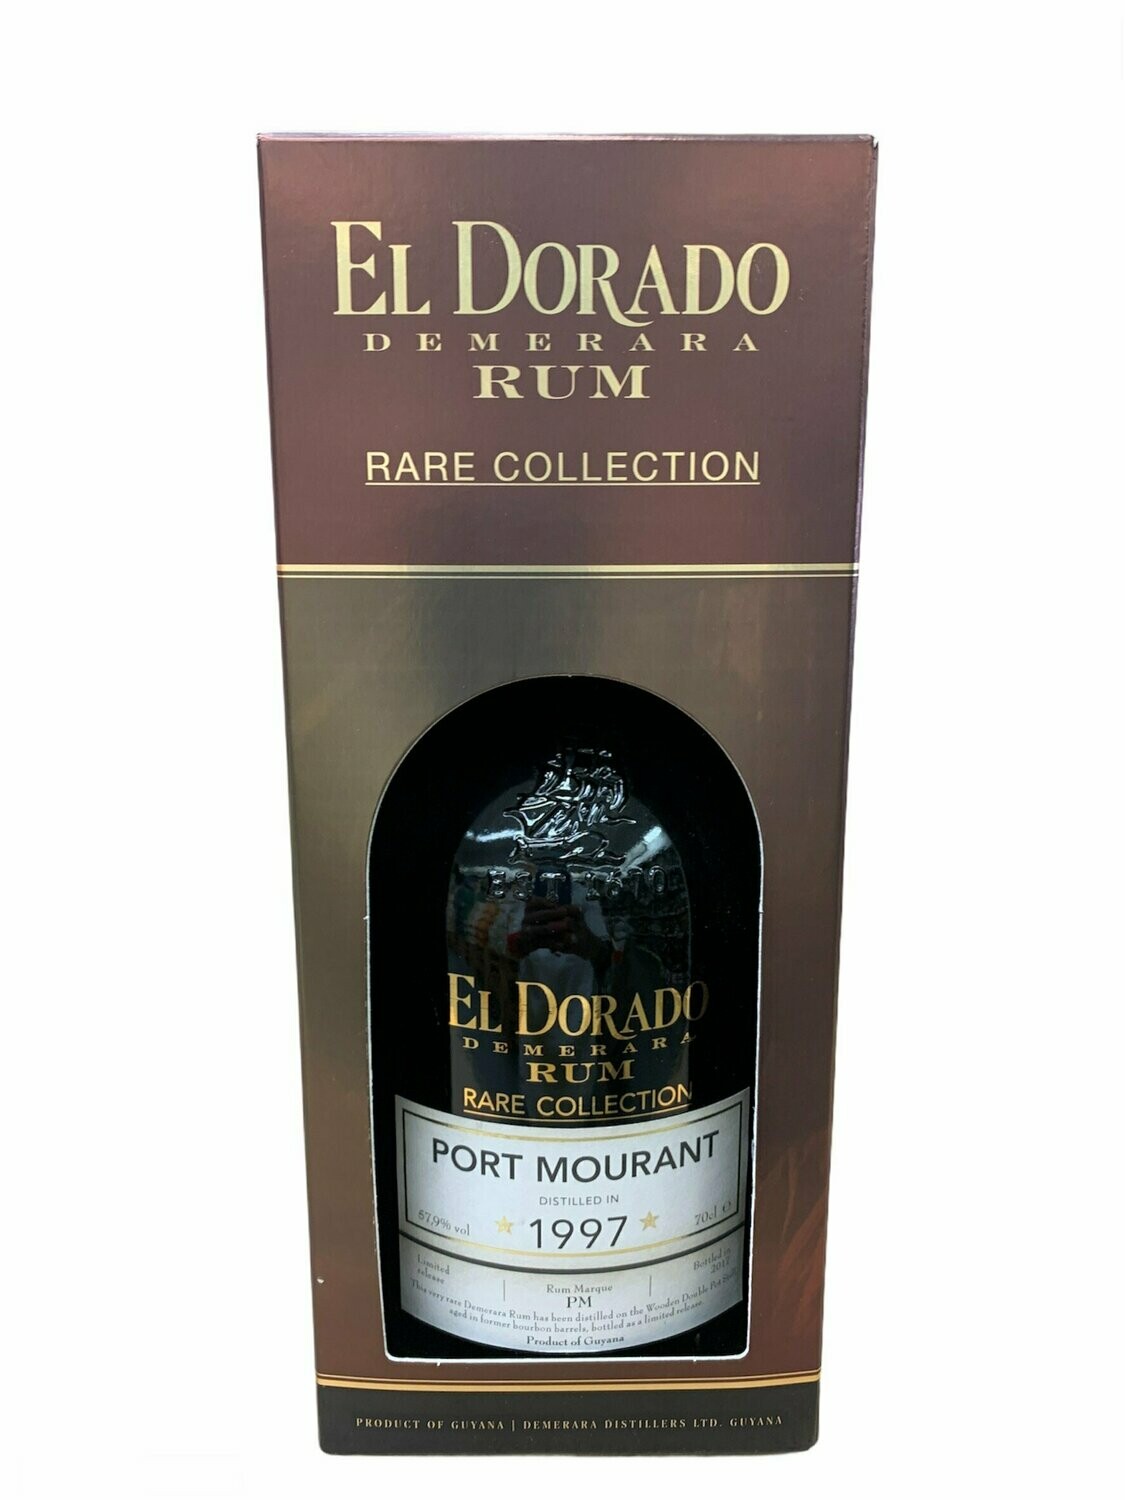 El Dorado Rum Port Mourant 1997 70cl 57,9% "RARE COLLECTION" "Demerara Distillers Ltd"